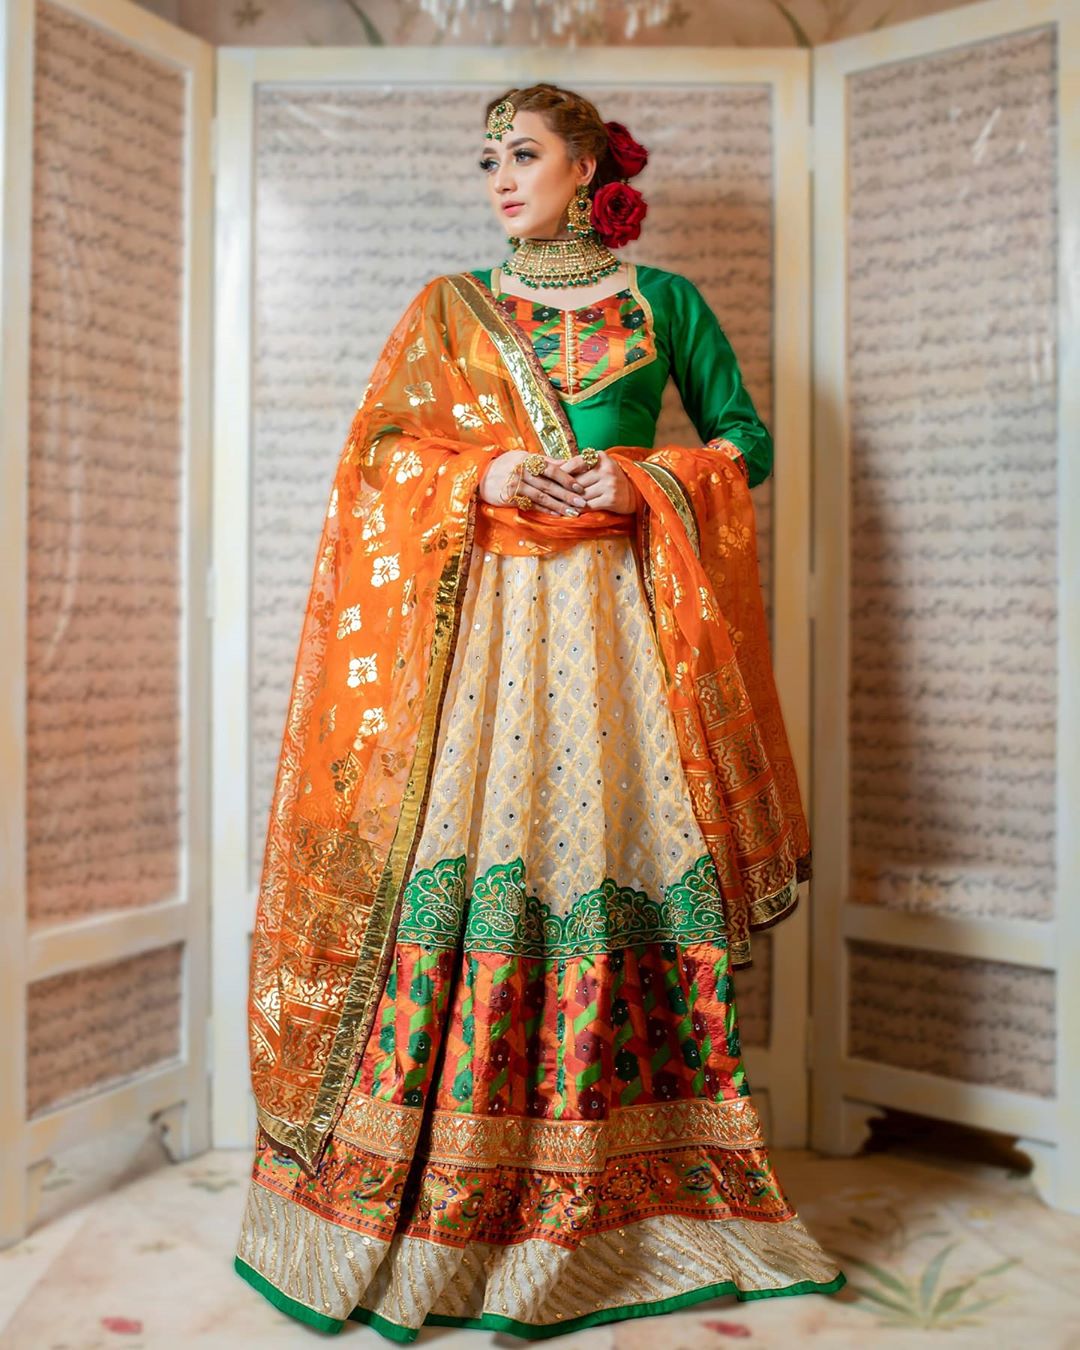 Ehd-e-Wafa Actress Momina Iqbal Majestic Looks from Bridal Photo Shoot